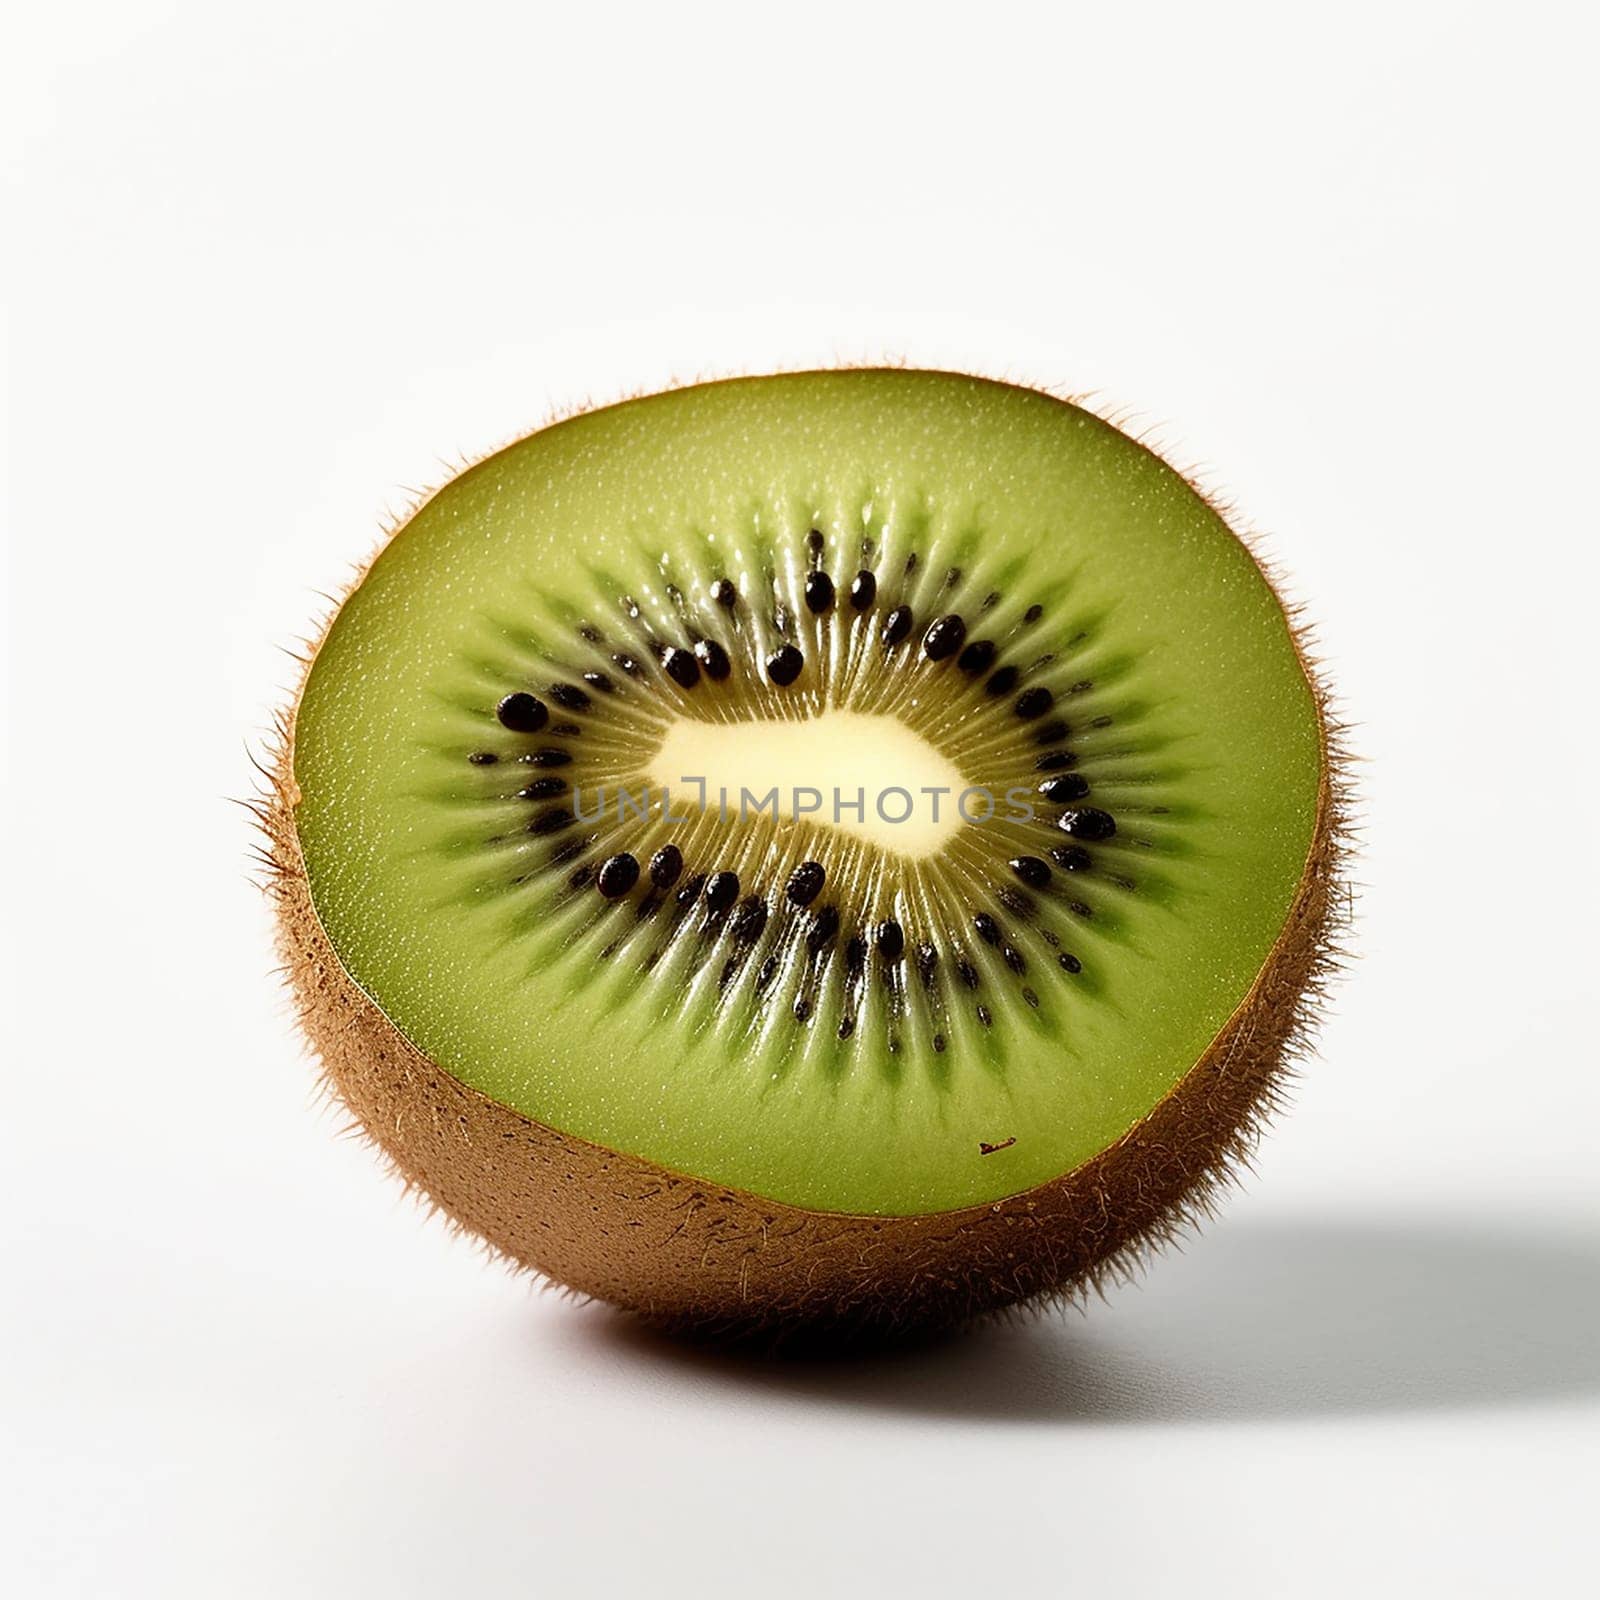 Fresh kiwi fruit cut in half on white background.